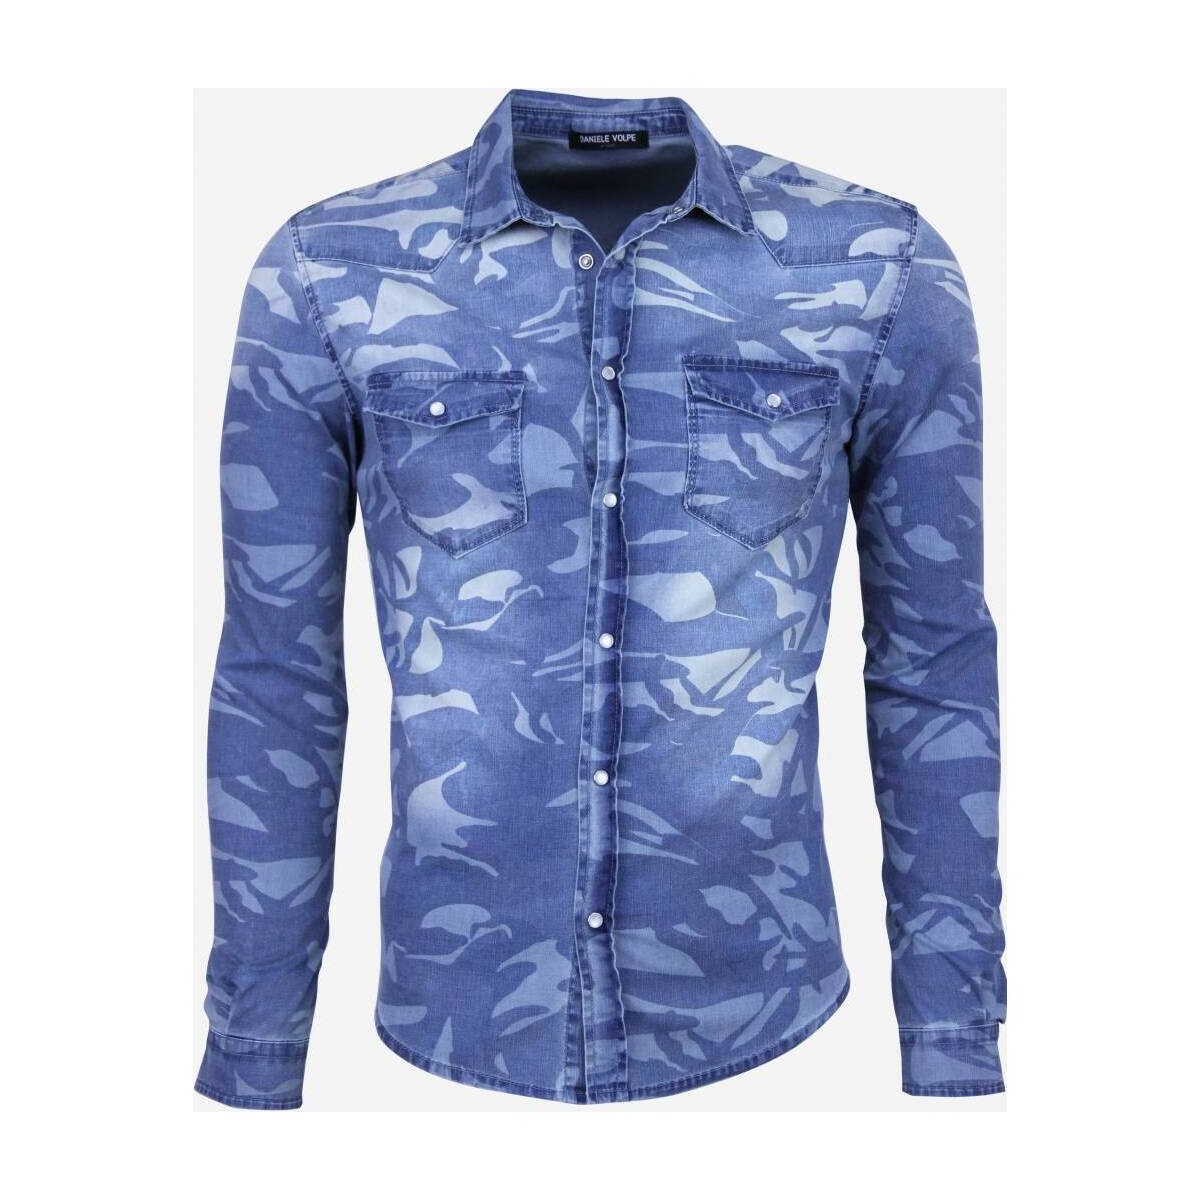 Textiel Heren Overhemden lange mouwen Daniele Volpe Denim Army Print Blauw